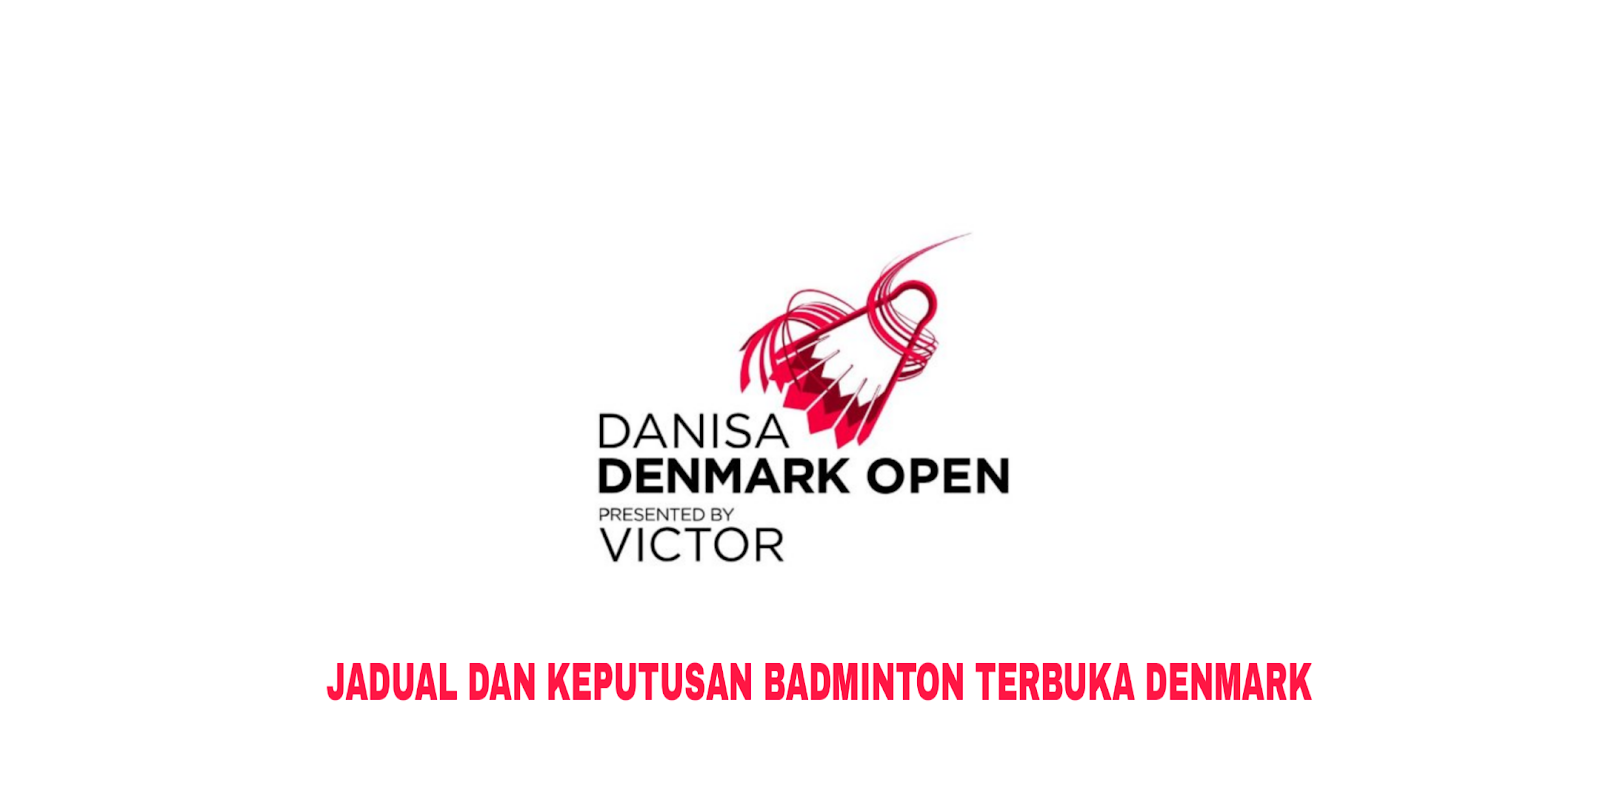 Keputusan Badminton Terbuka Denmark 2019 (Jadual)